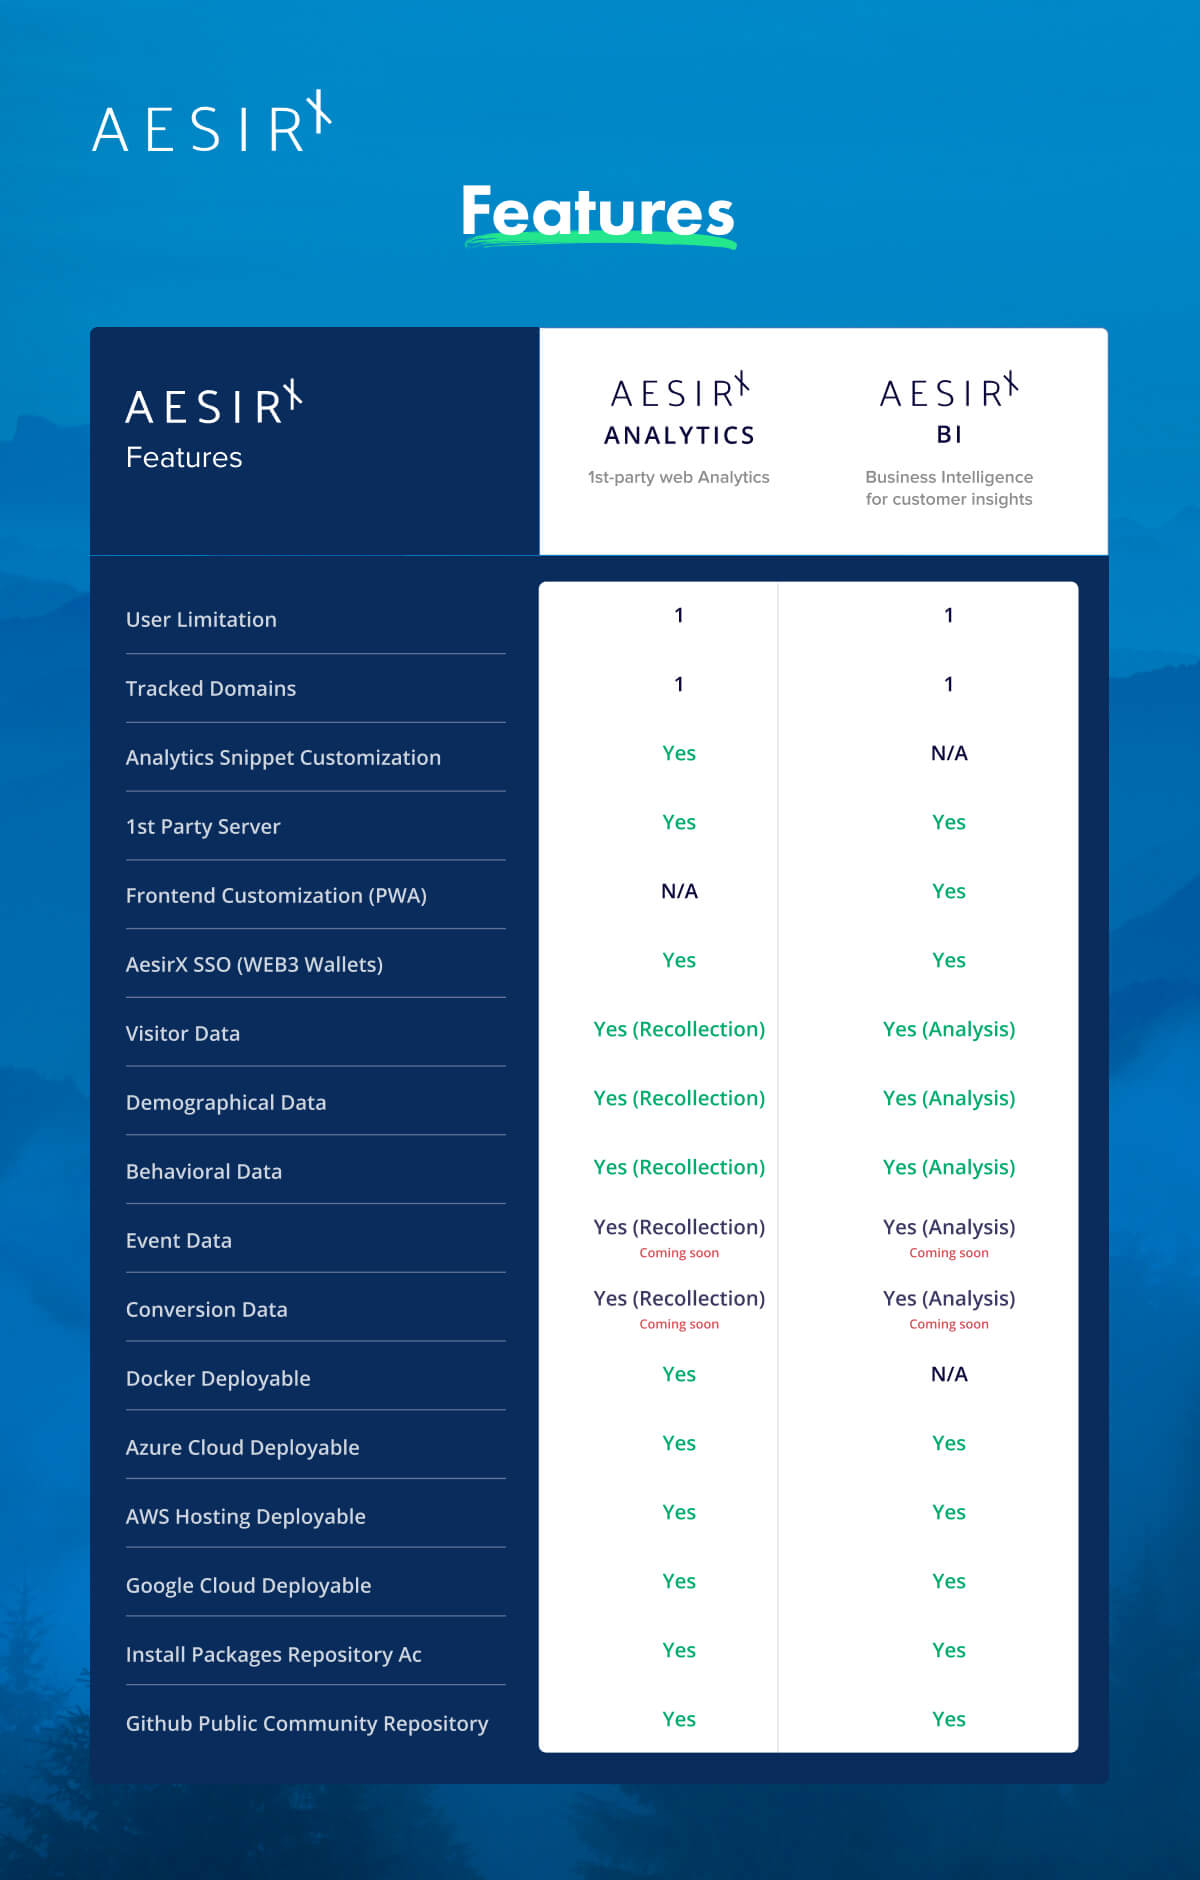 features of aesirx analytics and aesirx bi